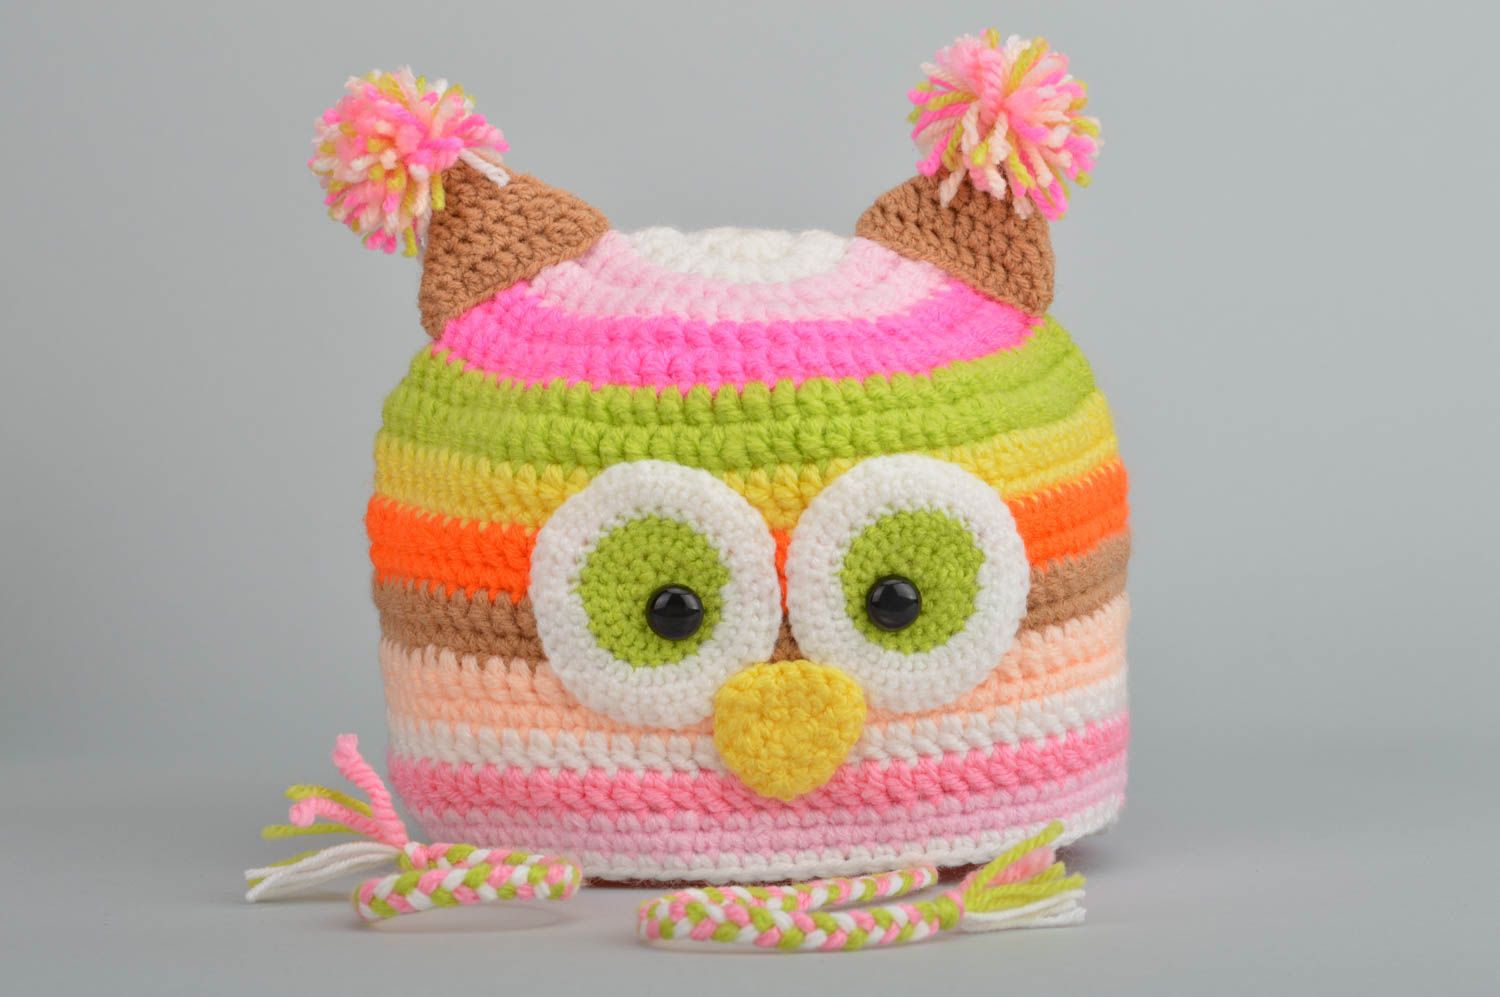 Unusual handmade beautiful crocheted cap in shape of owl on strings for kids photo 2